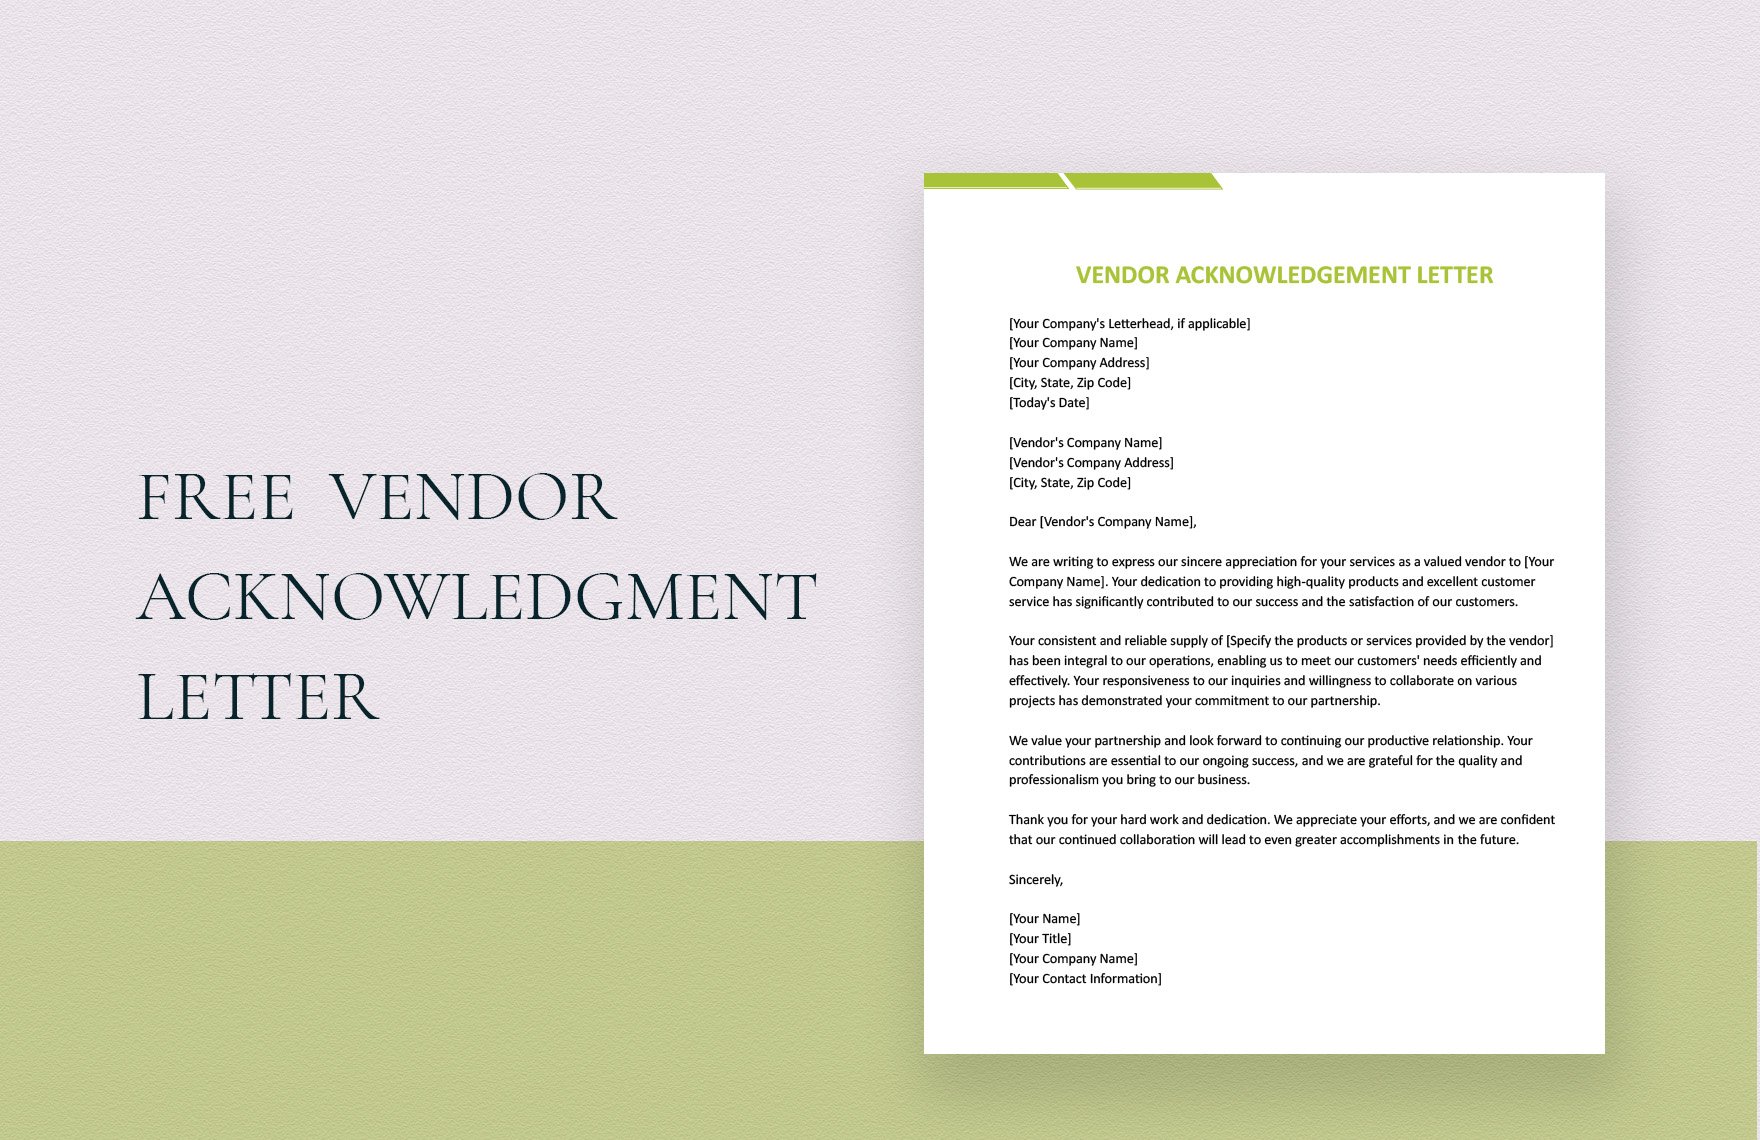 Vendor Acknowledgement Letter